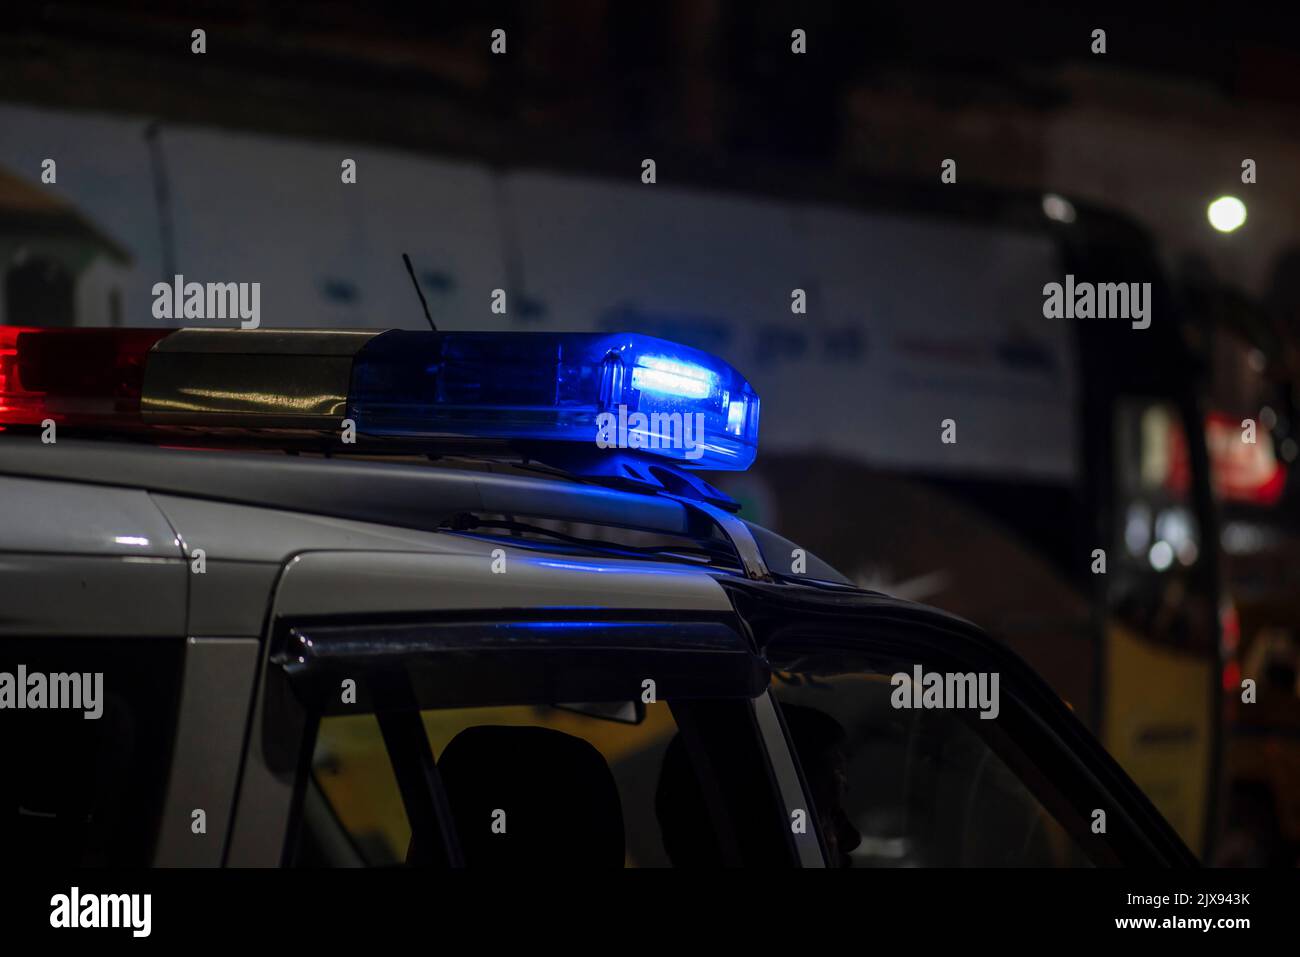 Emergency light of police patrolling car on street in night Stock Photo